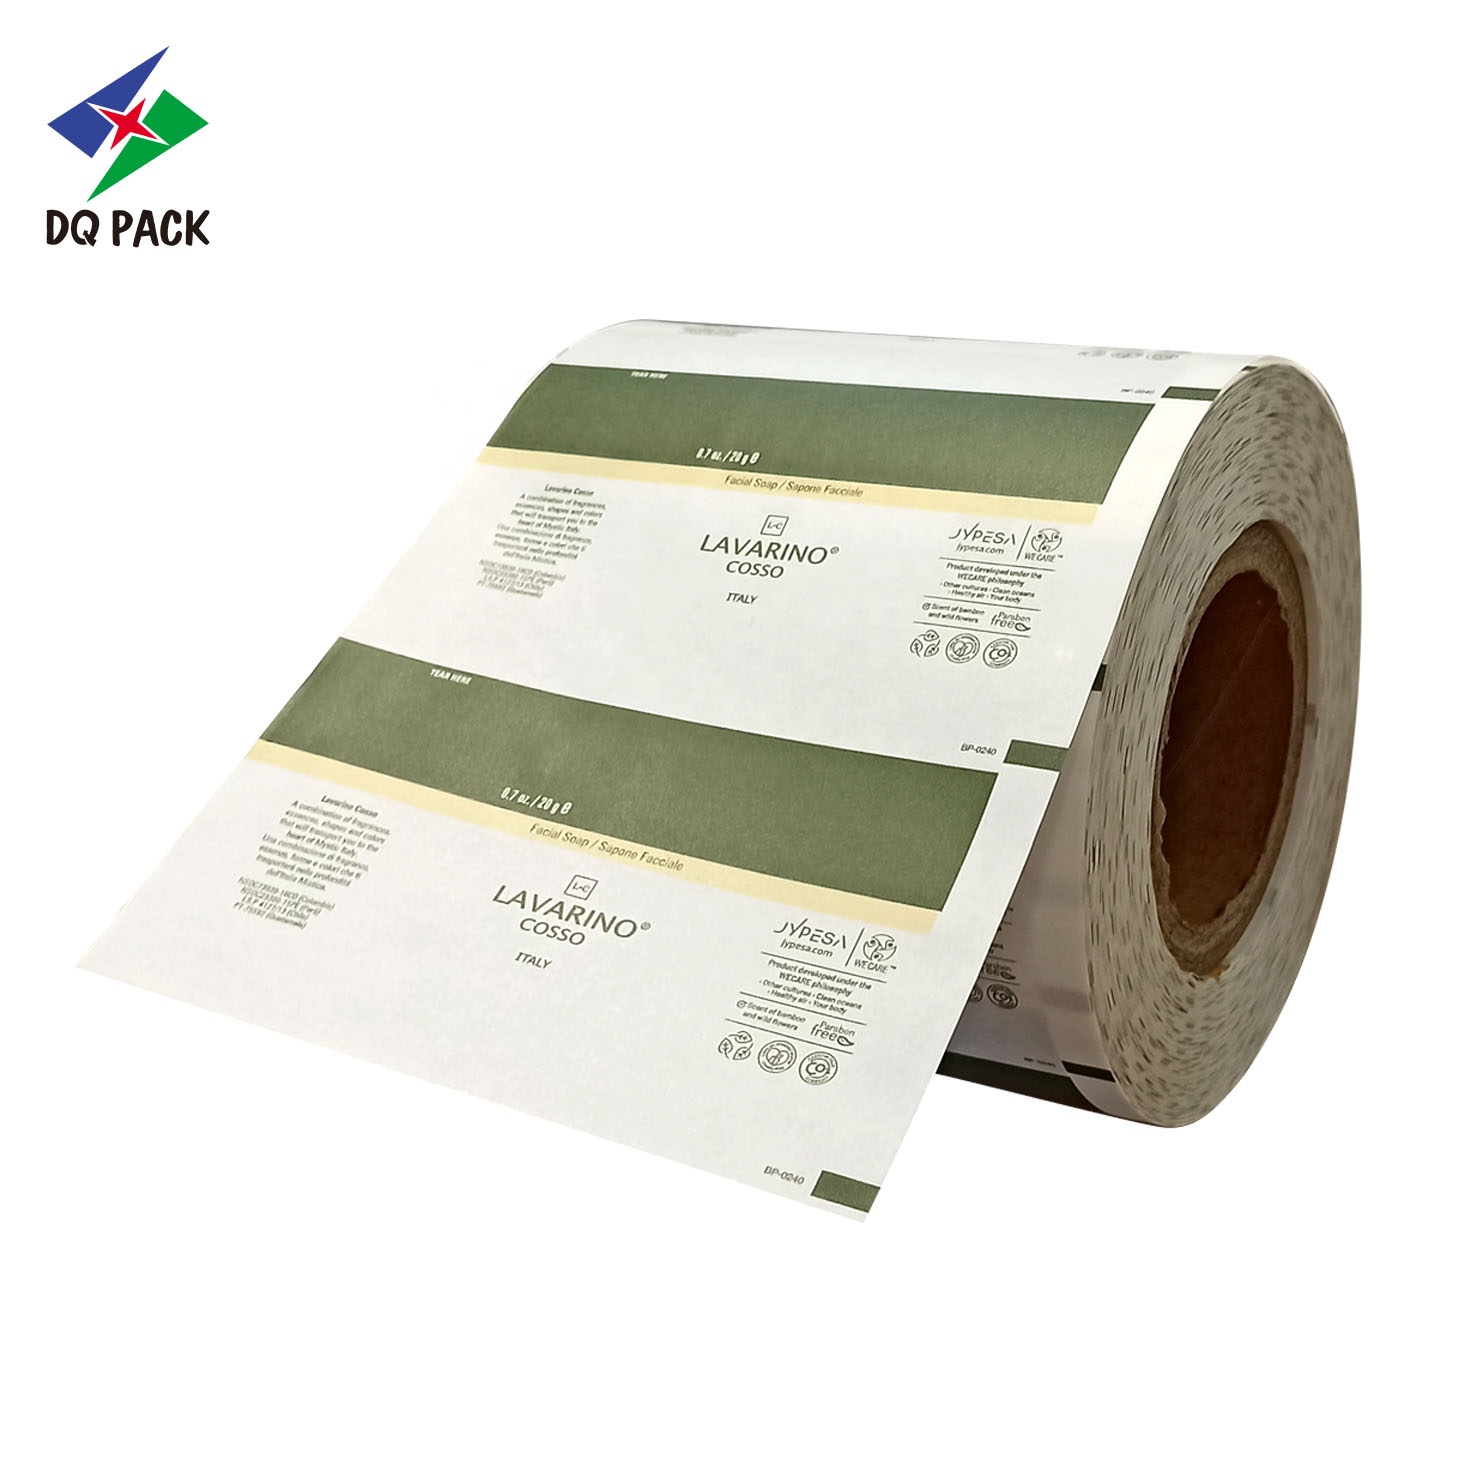 DQ PACK Matte BOPP Laminated Soap Packaging Film Roll Stock